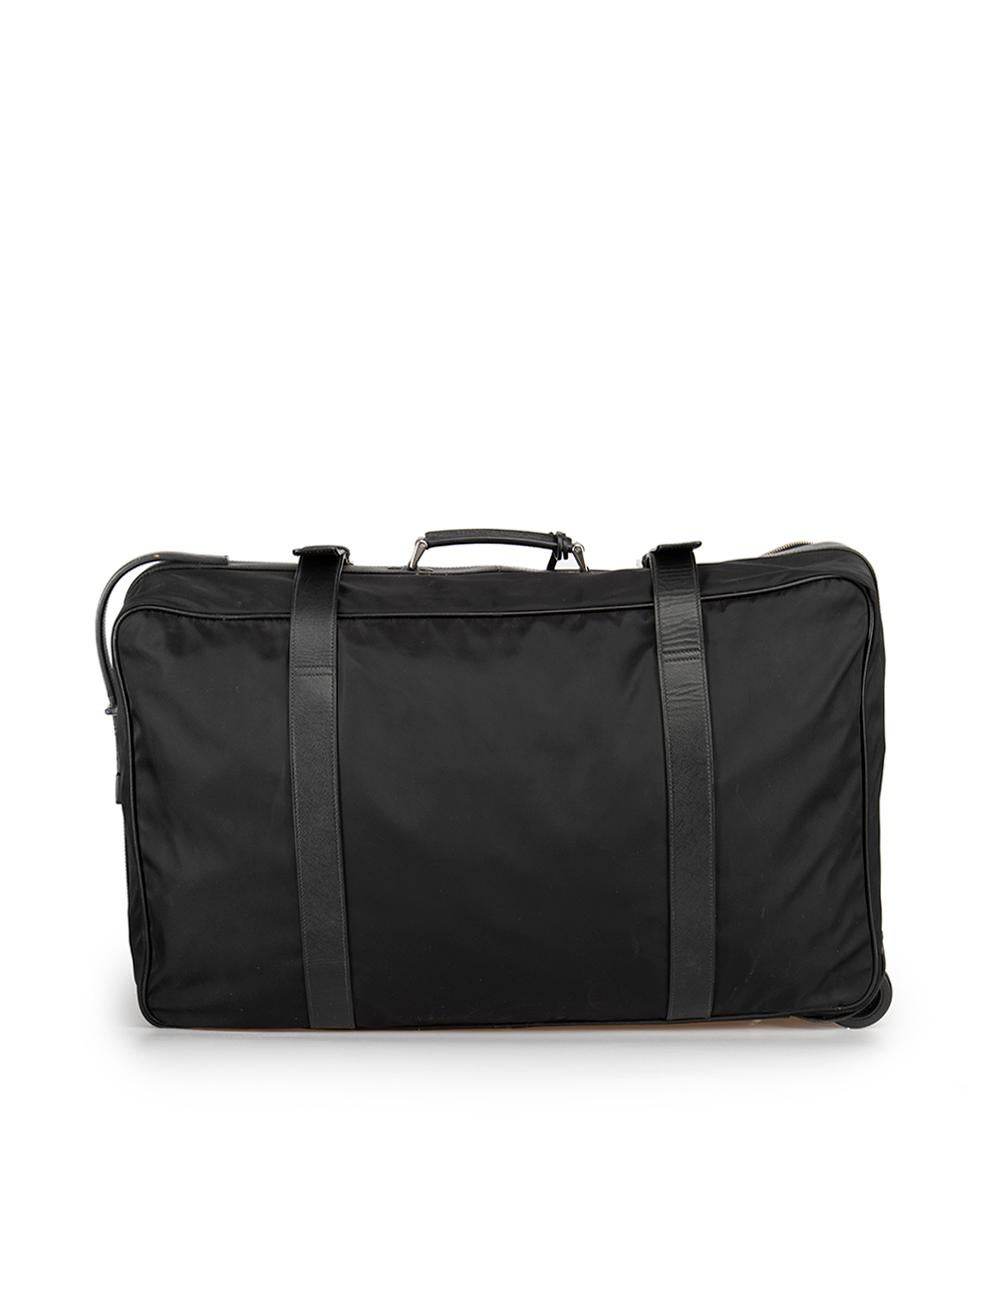 Prada Black Nylon Semi-Rigid Wheeled Suitcase In Excellent Condition For Sale In London, GB